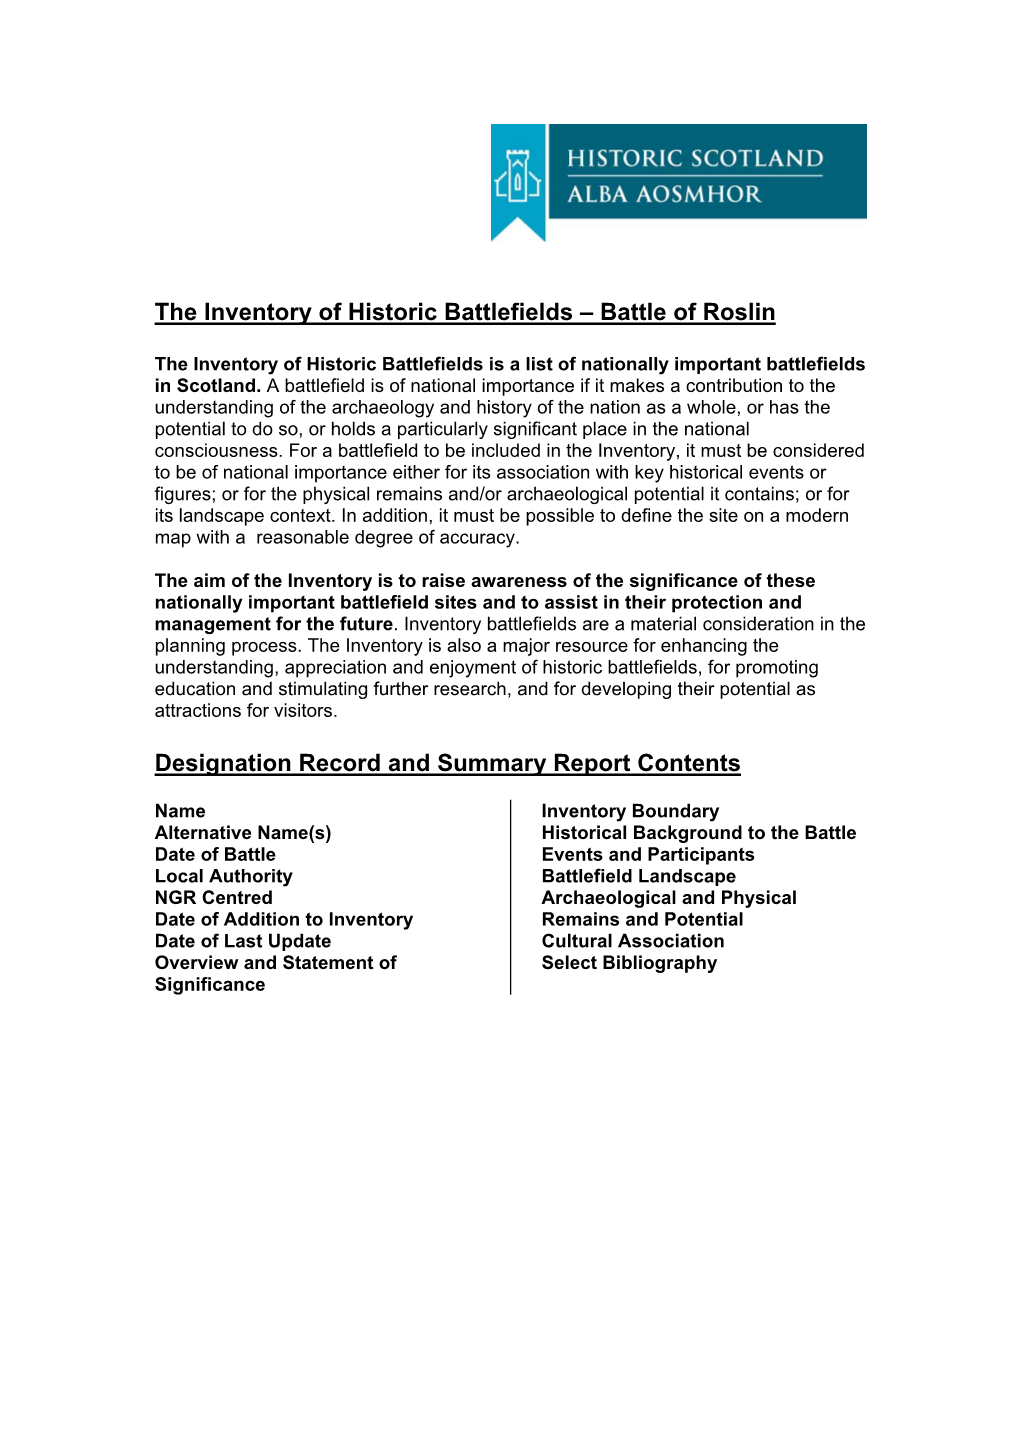 The Inventory of Historic Battlefields – Battle of Roslin Designation Record